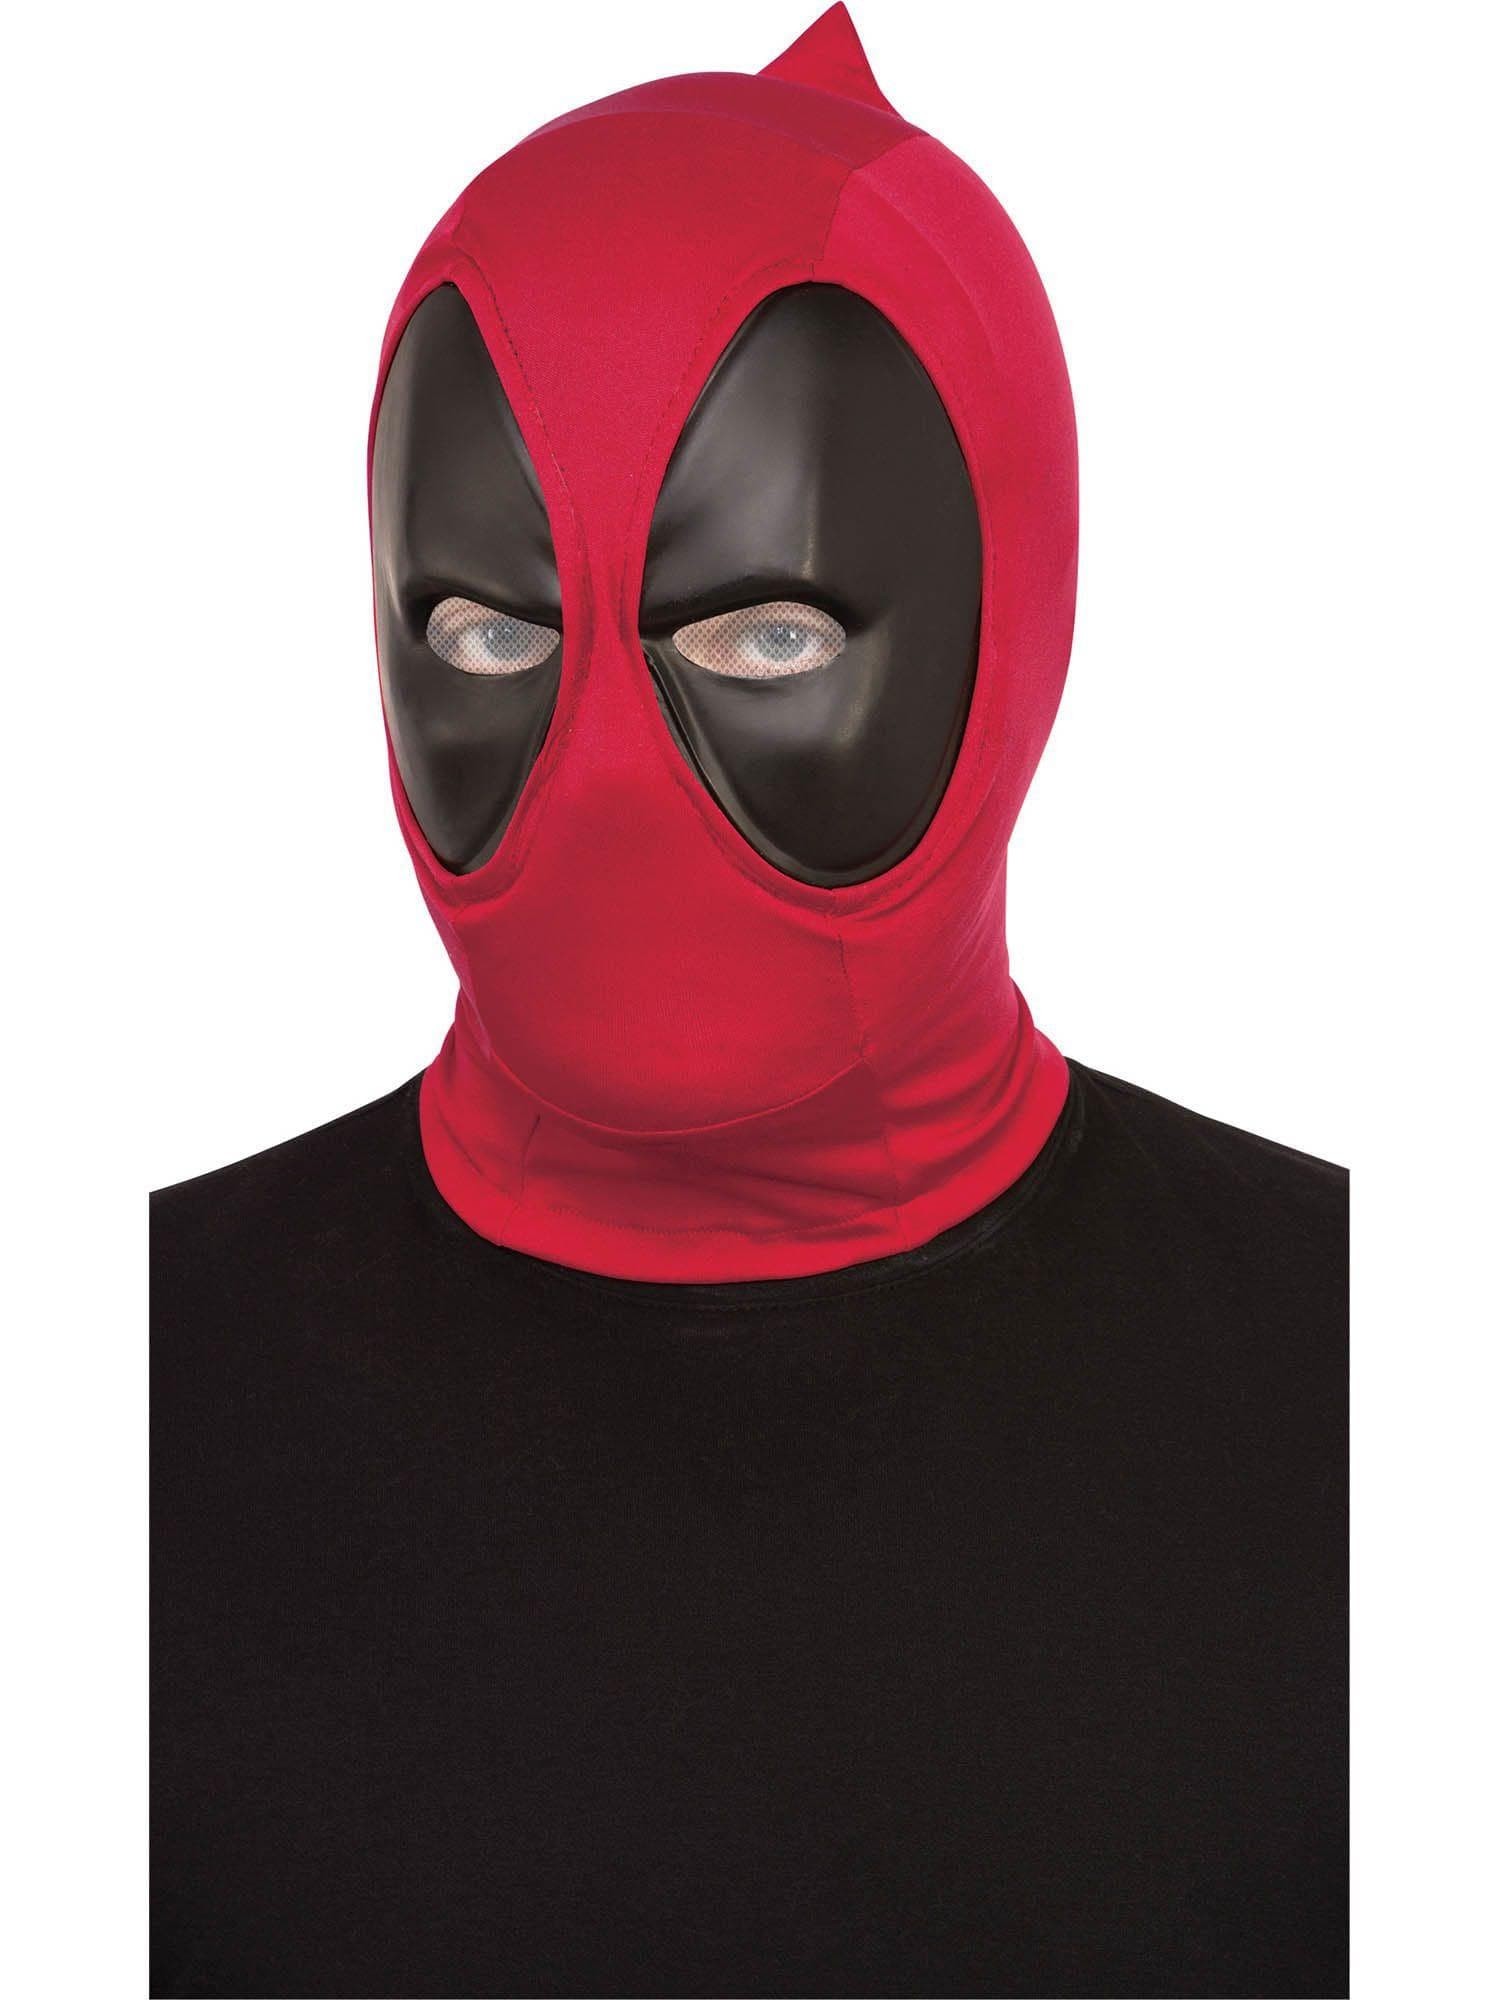 Men's Marvel Deadpool Mask - Deluxe - costumes.com